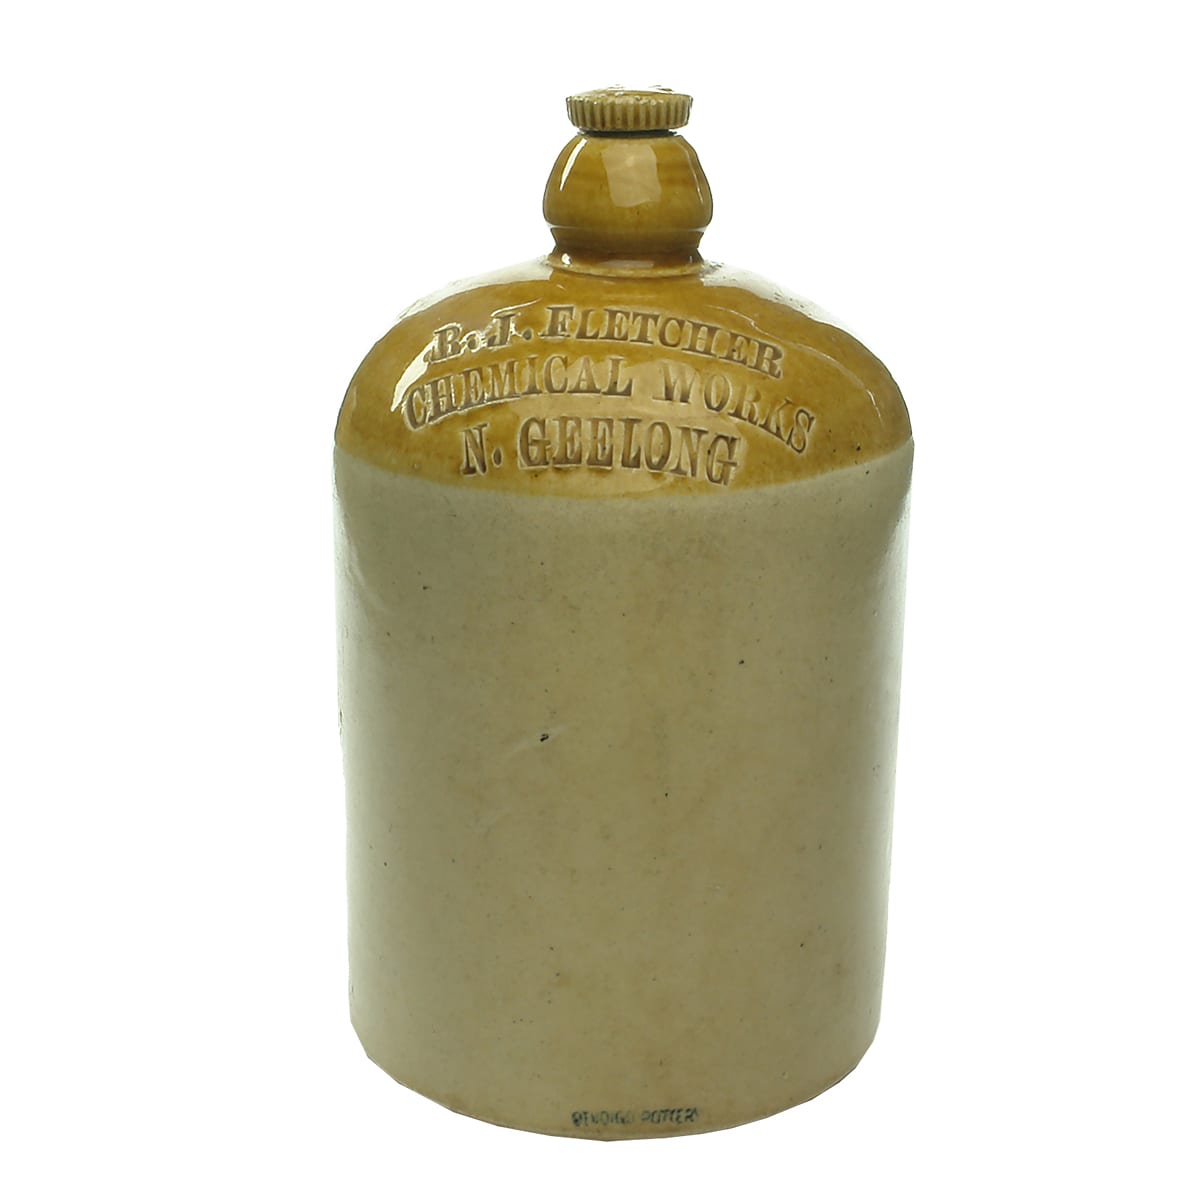 Demijohn. R. J. Fletcher, Chemical Works, N. Geelong. Internal Thread. Half Gallon. With stopper. (Victoria)